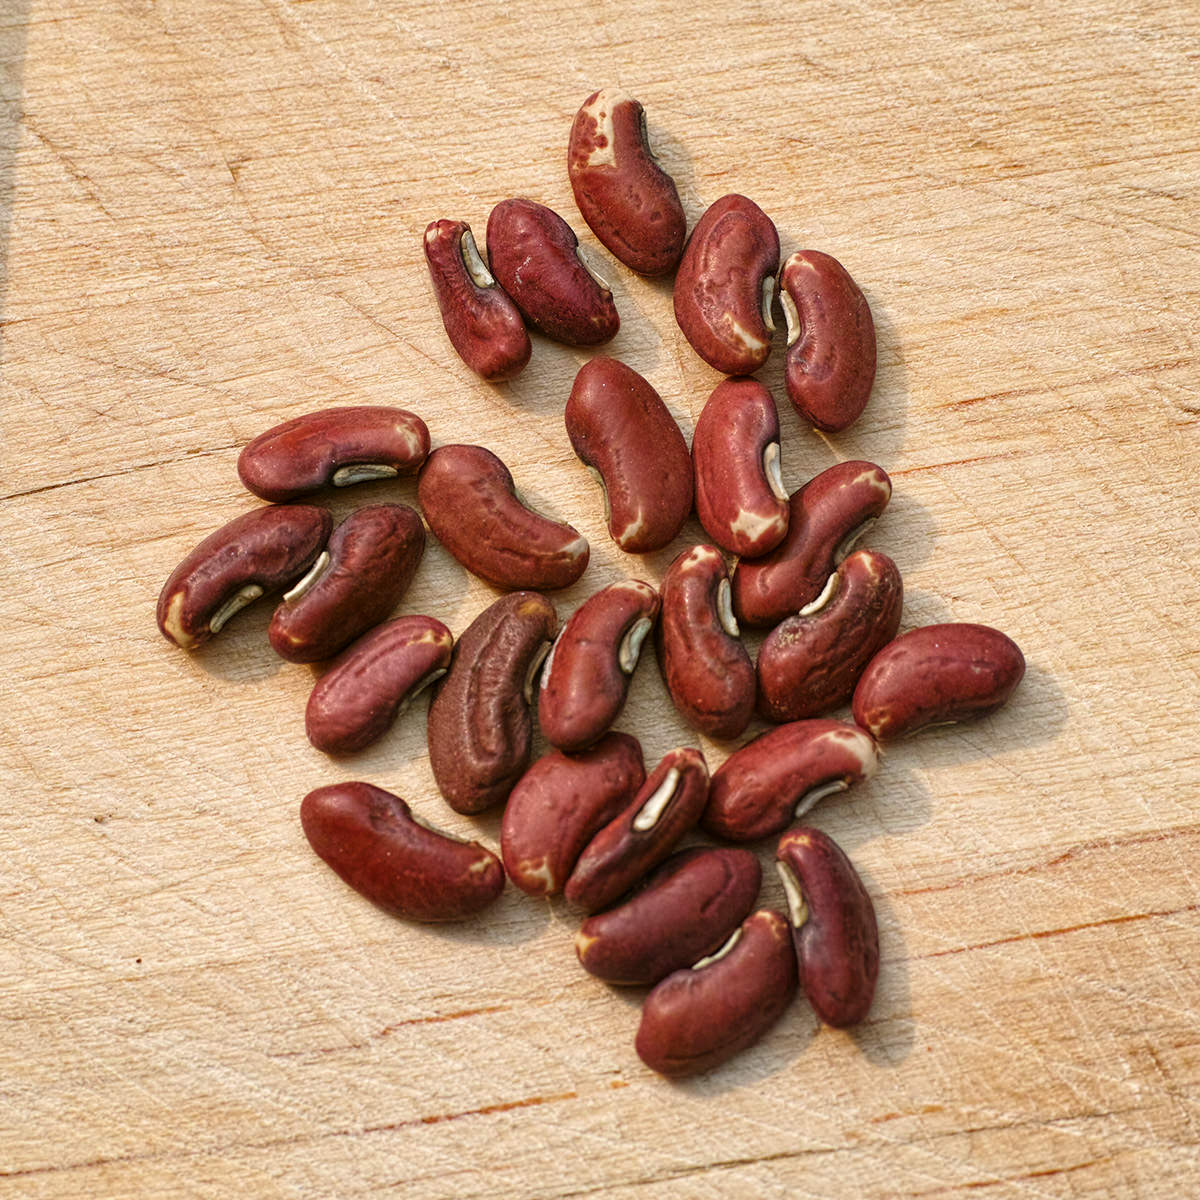 Yardlong Pole (Snap) Bean Seeds